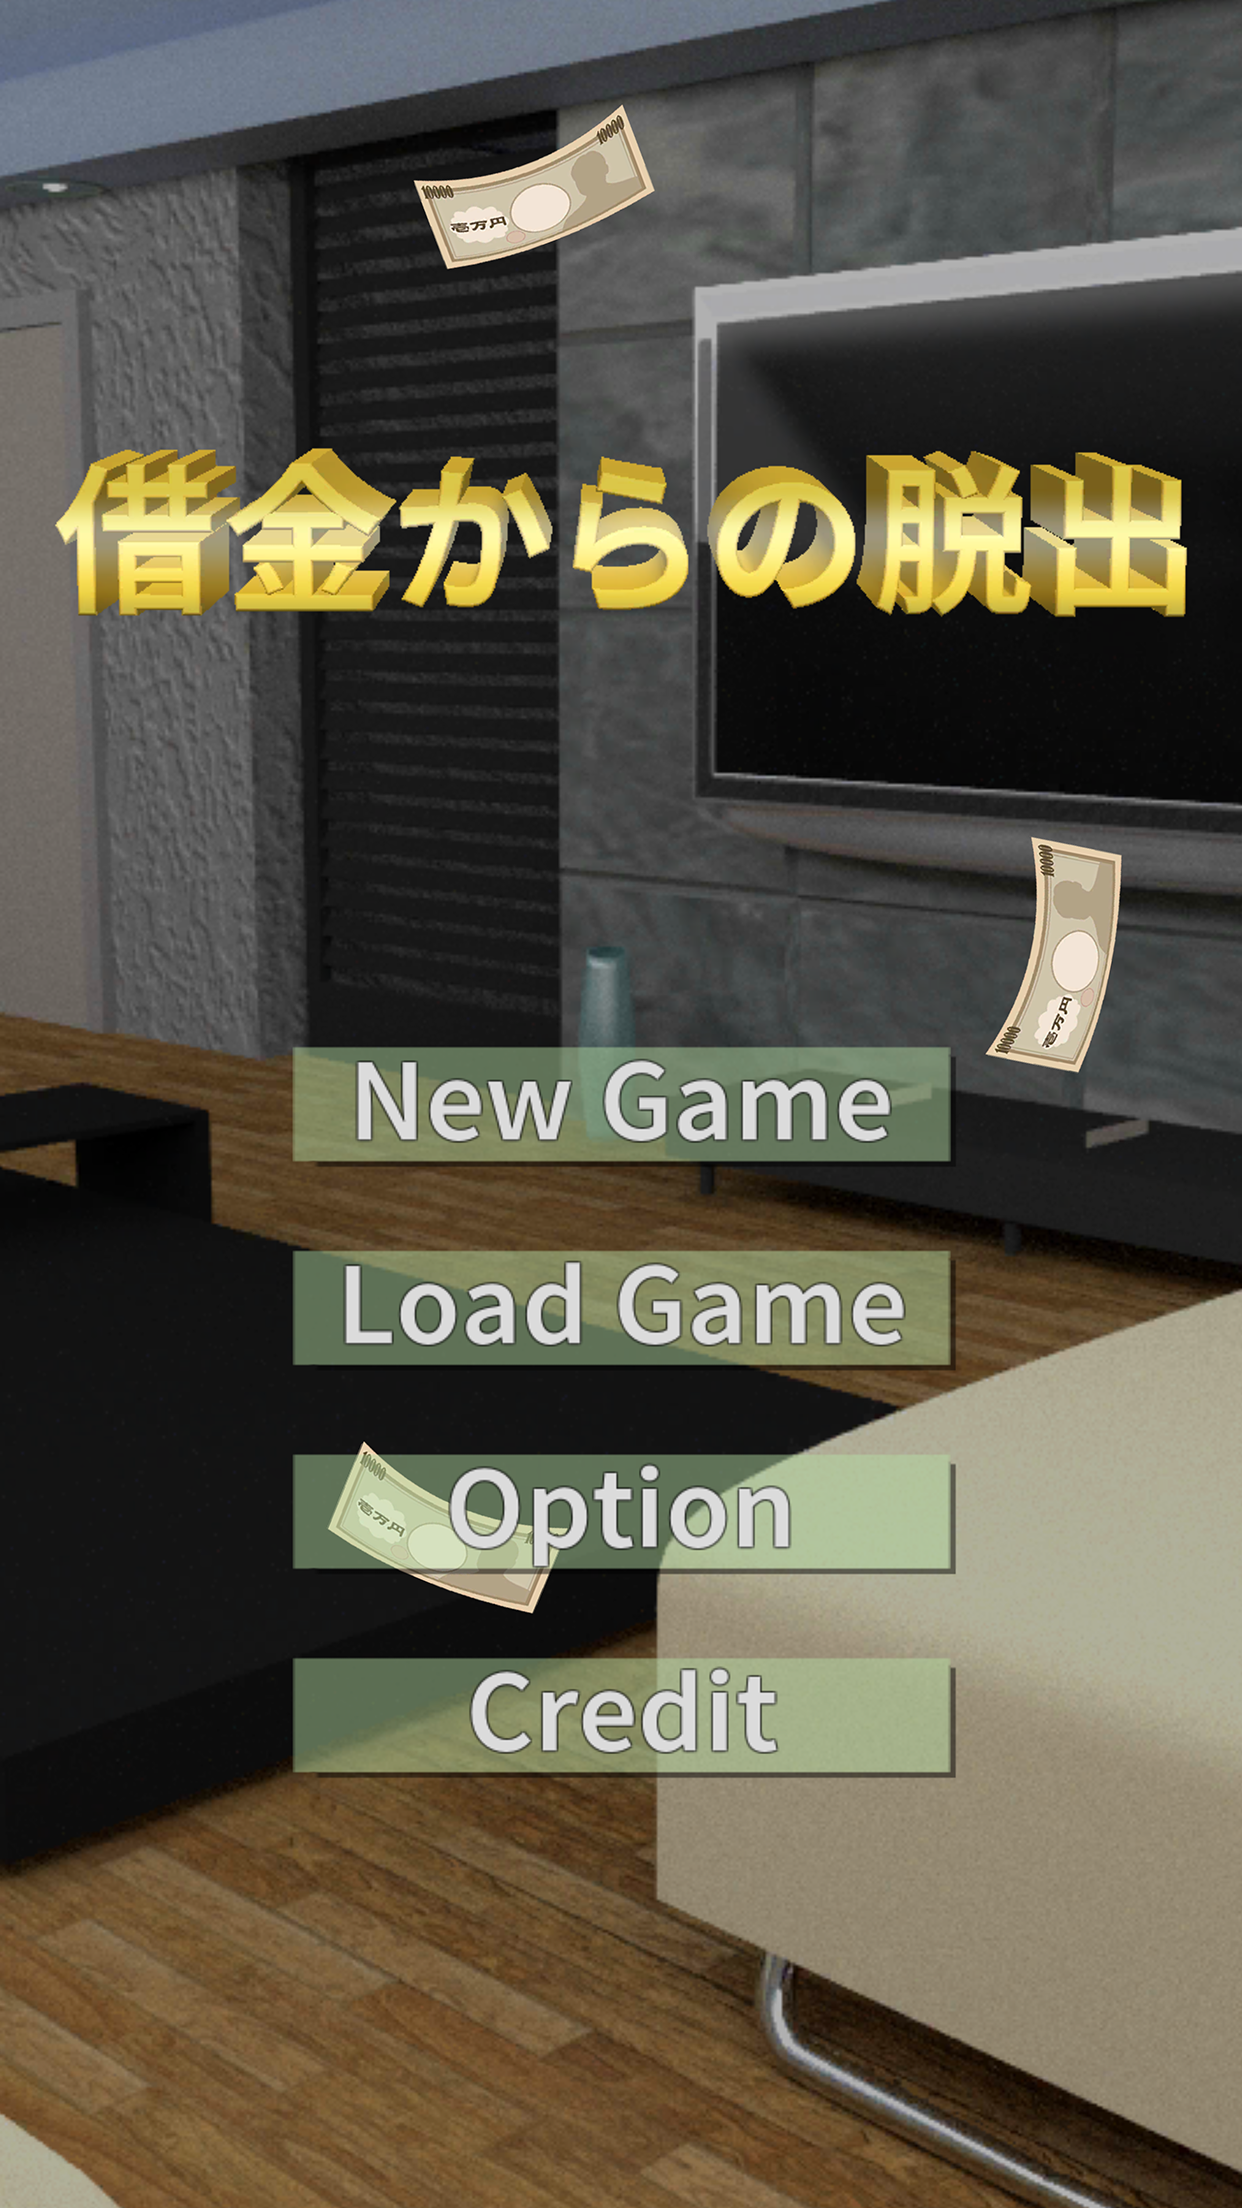 Screenshot 1 of [Escape game] Tumakas mula sa utang 1.0